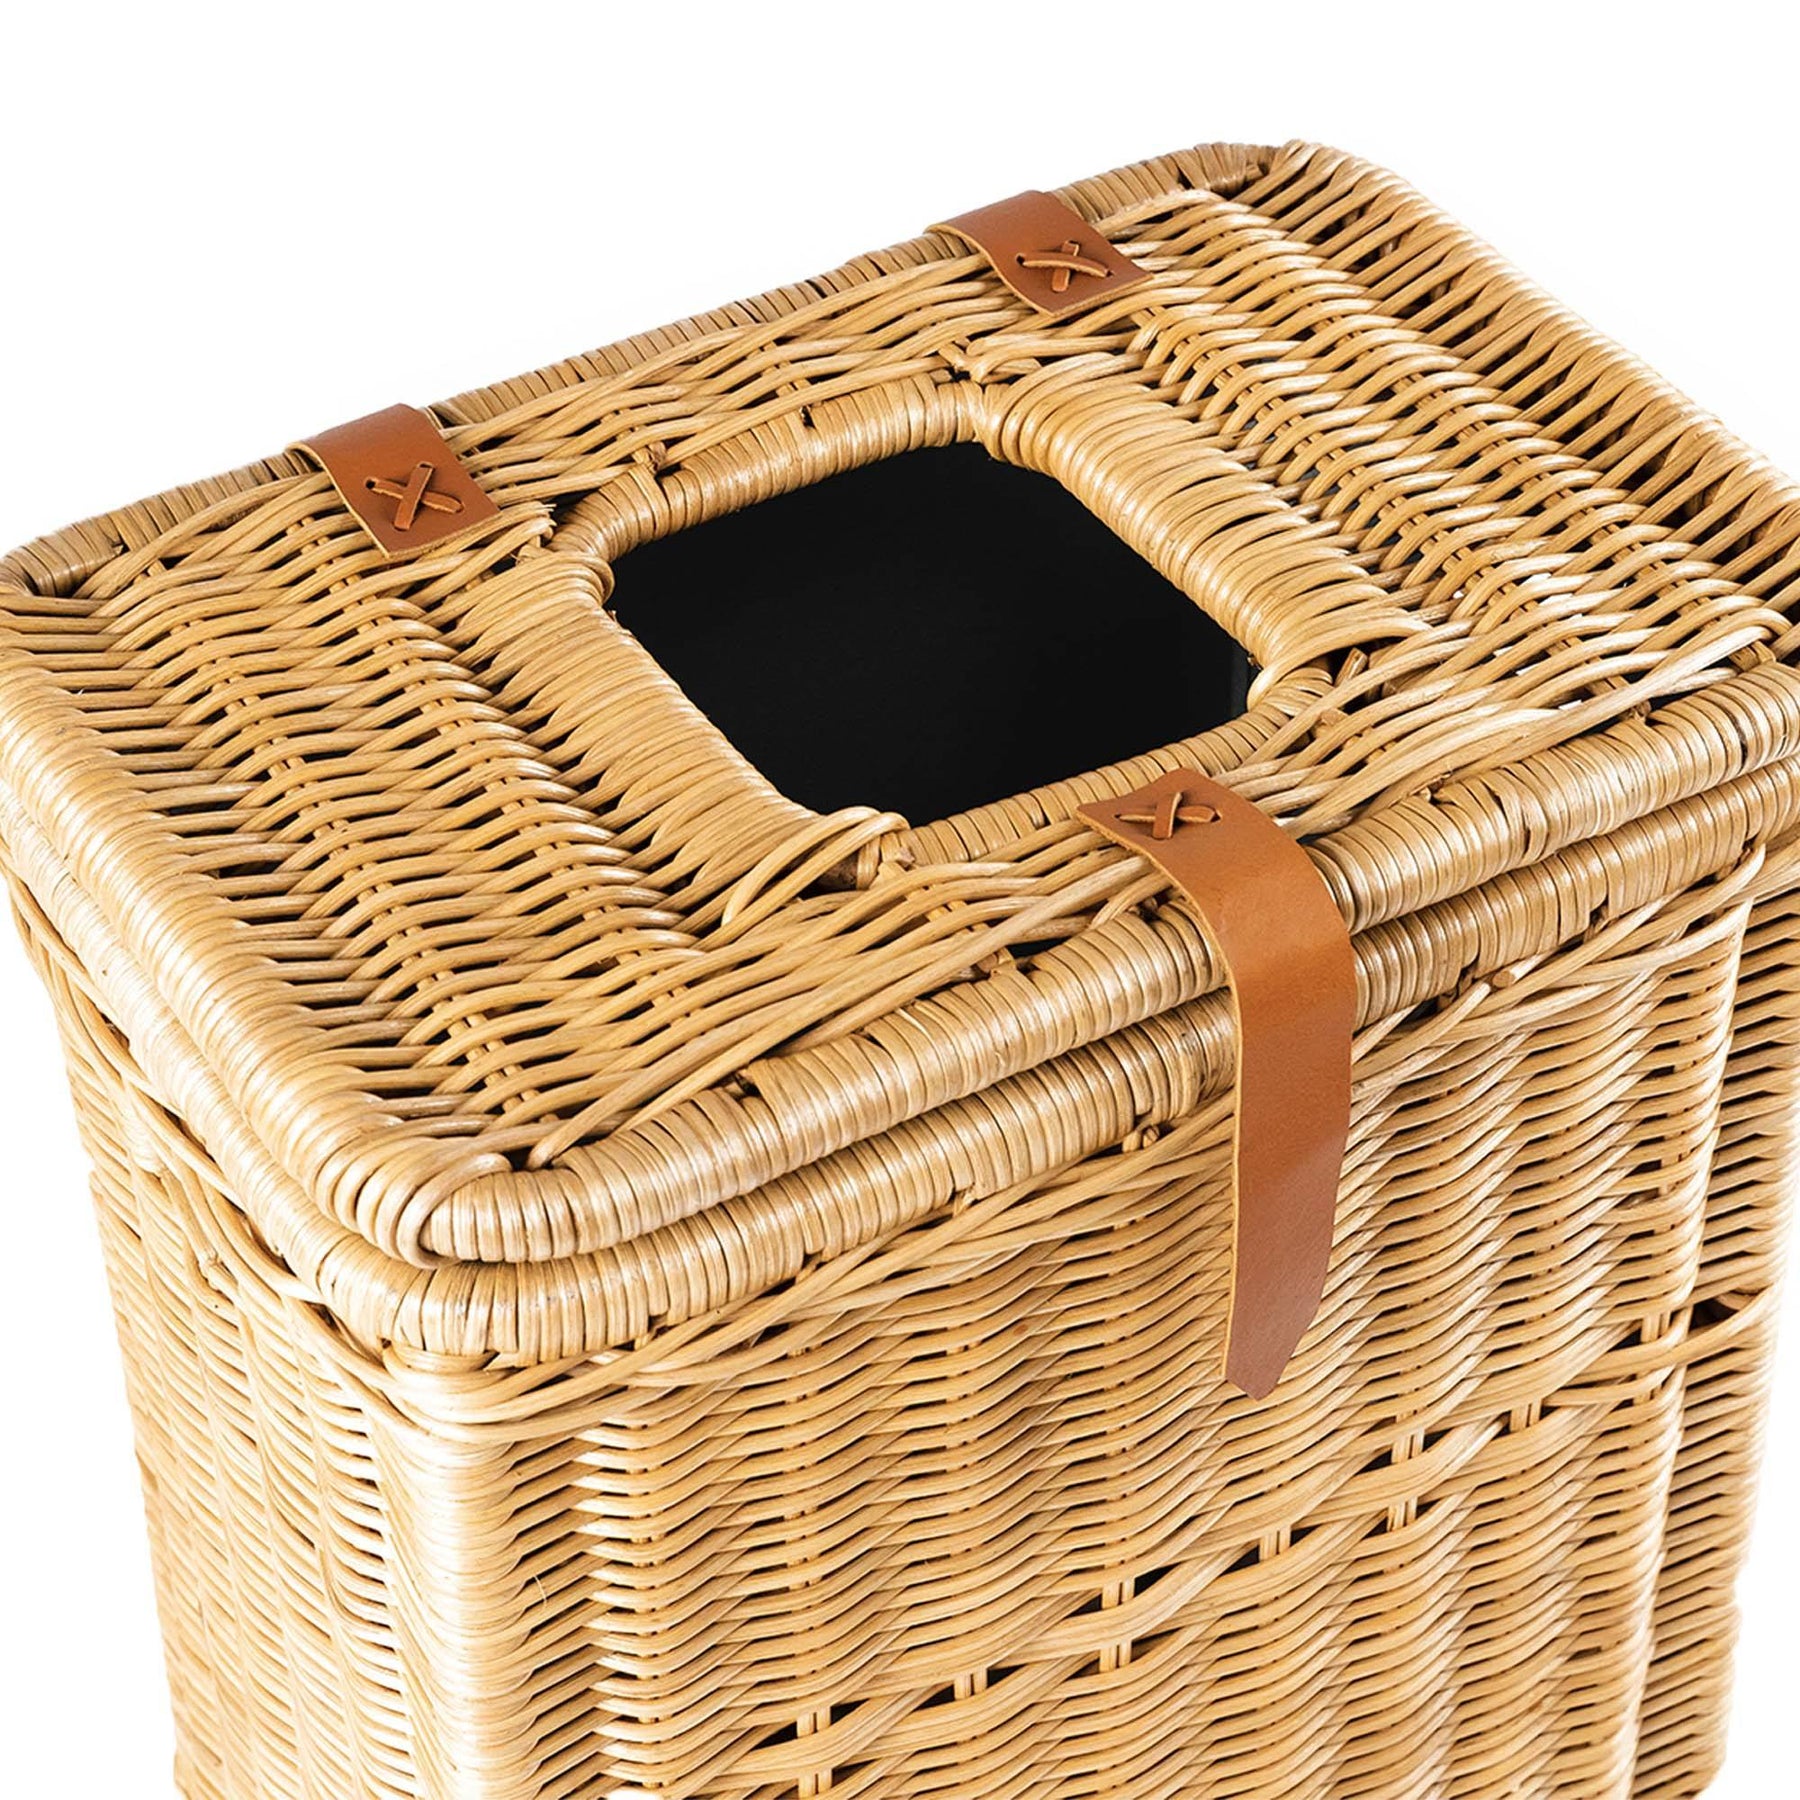 Drop-In Rectangular Wicker Trash Basket with Metal Liner - Sandstone / One  Size